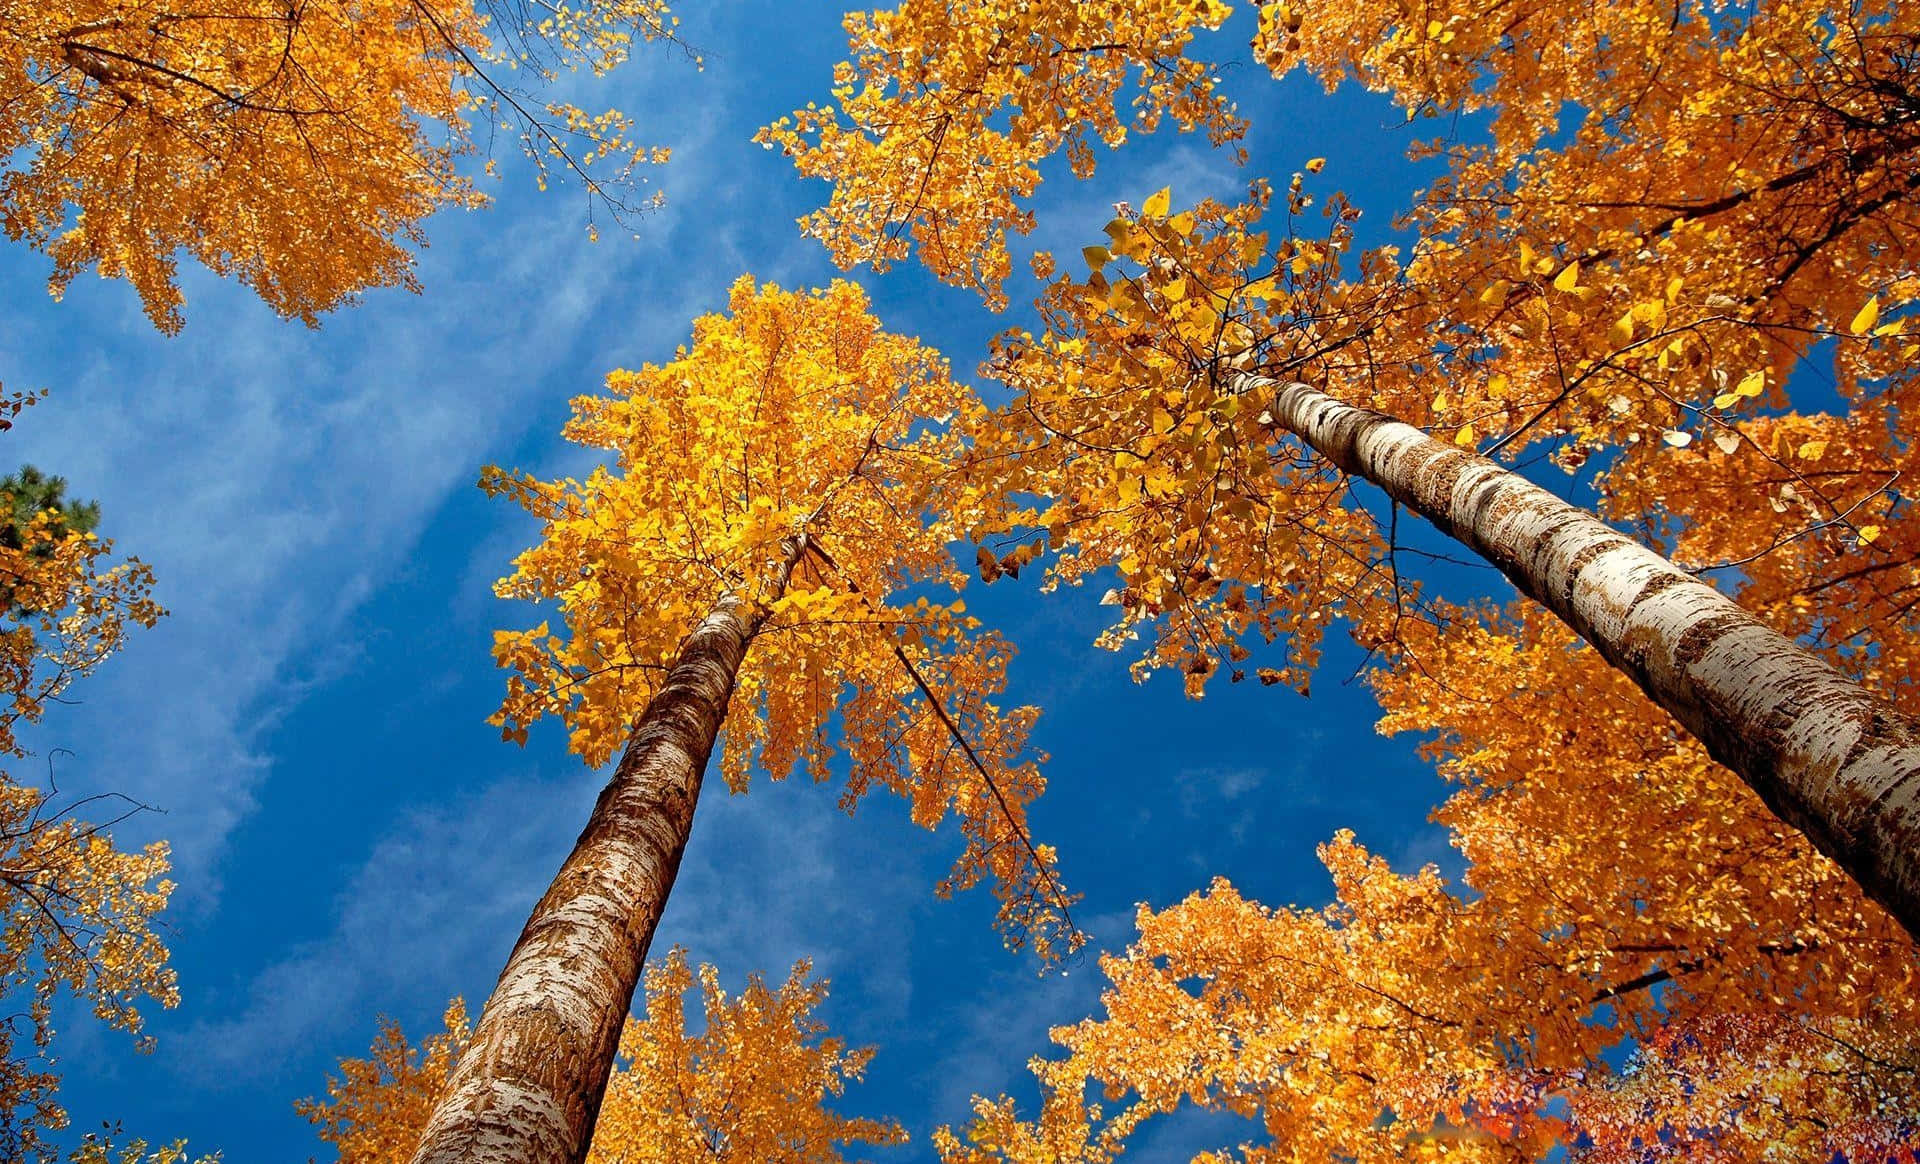 Stunning Fall Trees in a Serene Landscape Wallpaper